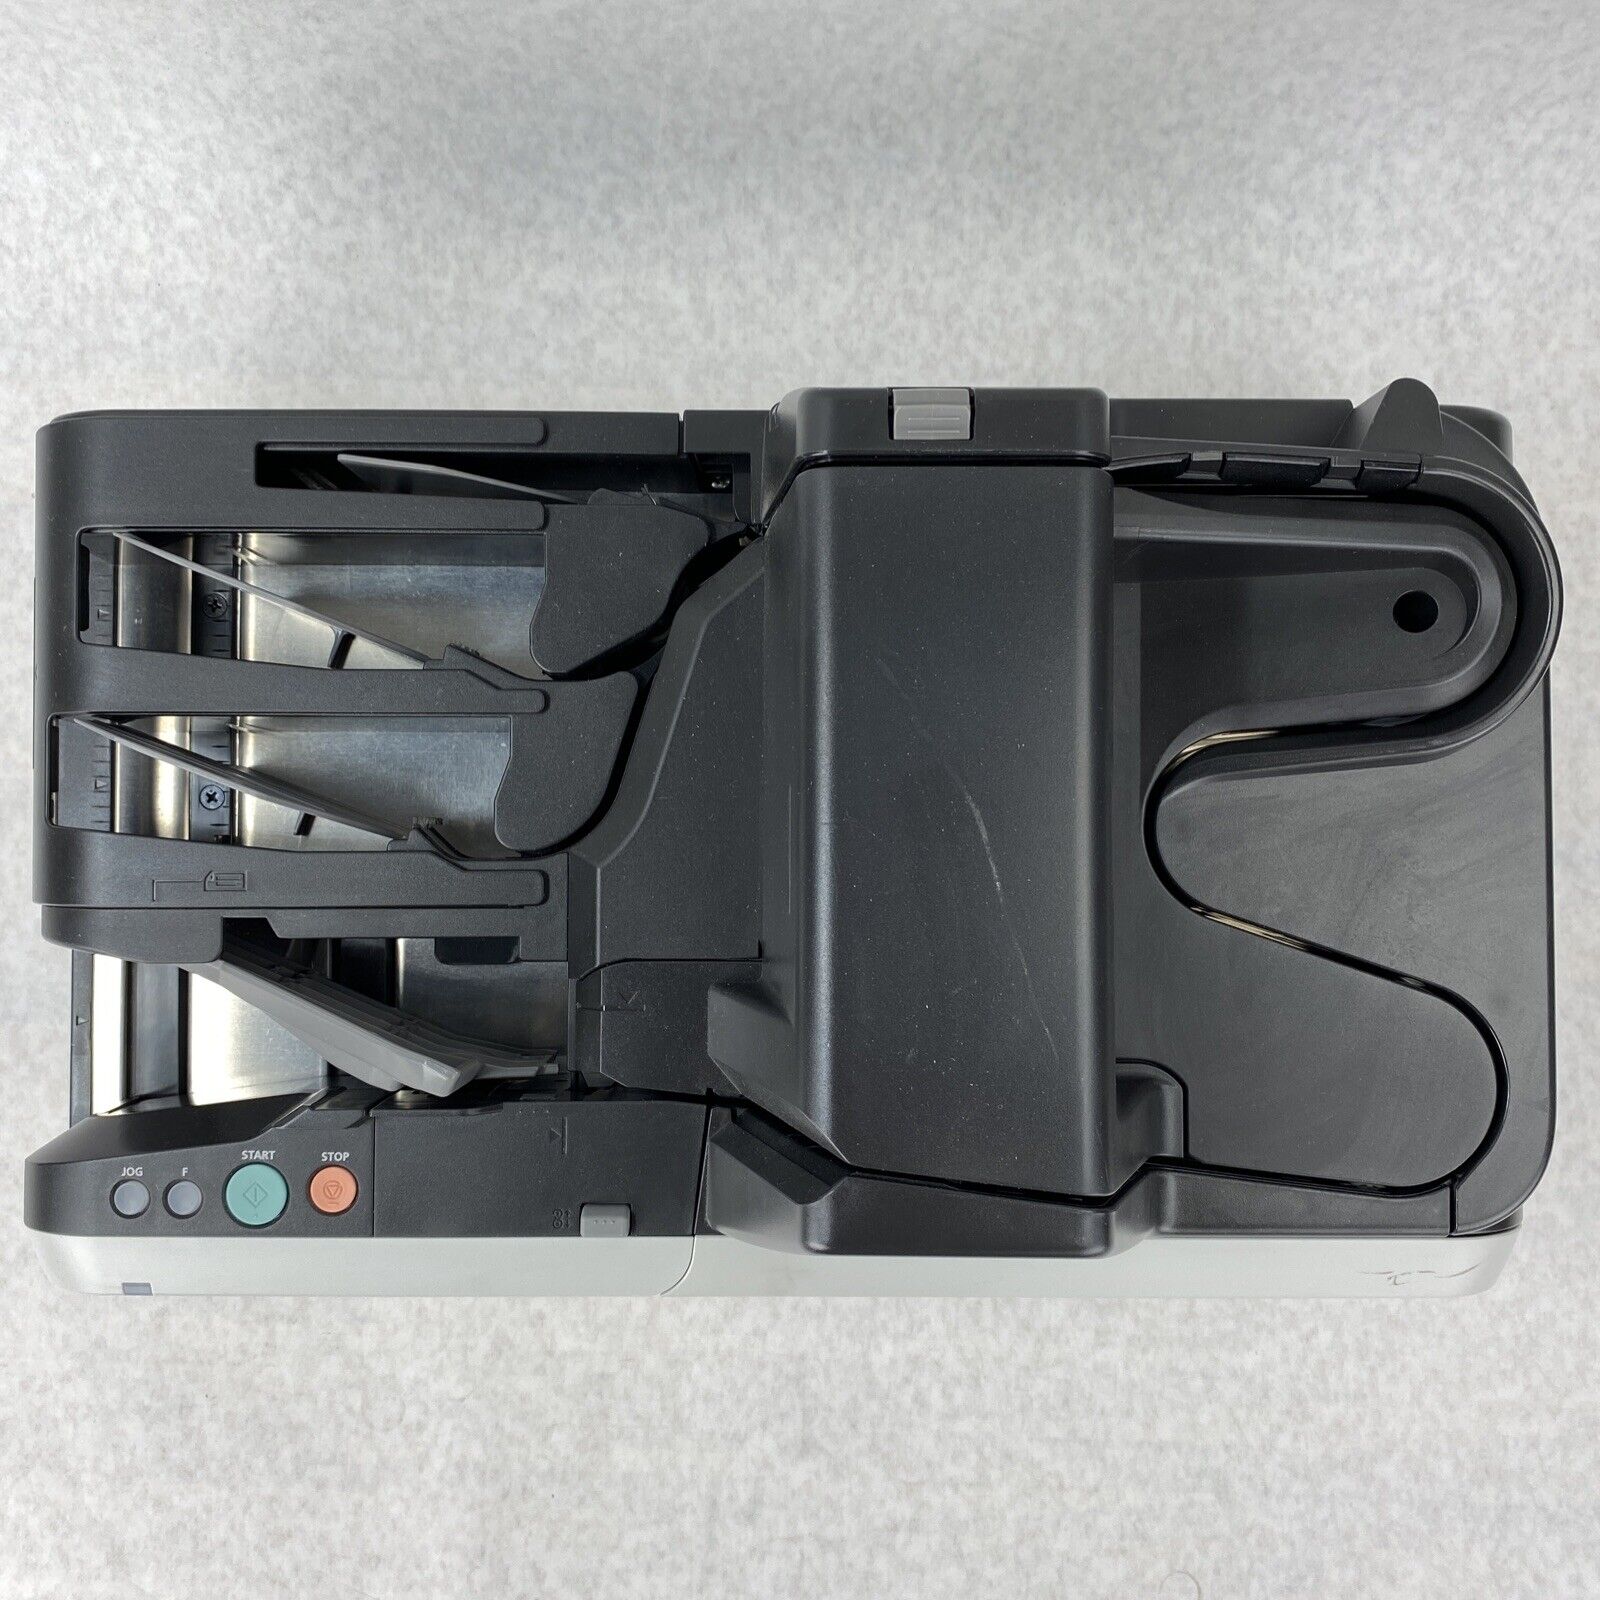 Canon M111021 ImageFORMULA CR-190i USB High Volume Check Transport Scanner w/PSU